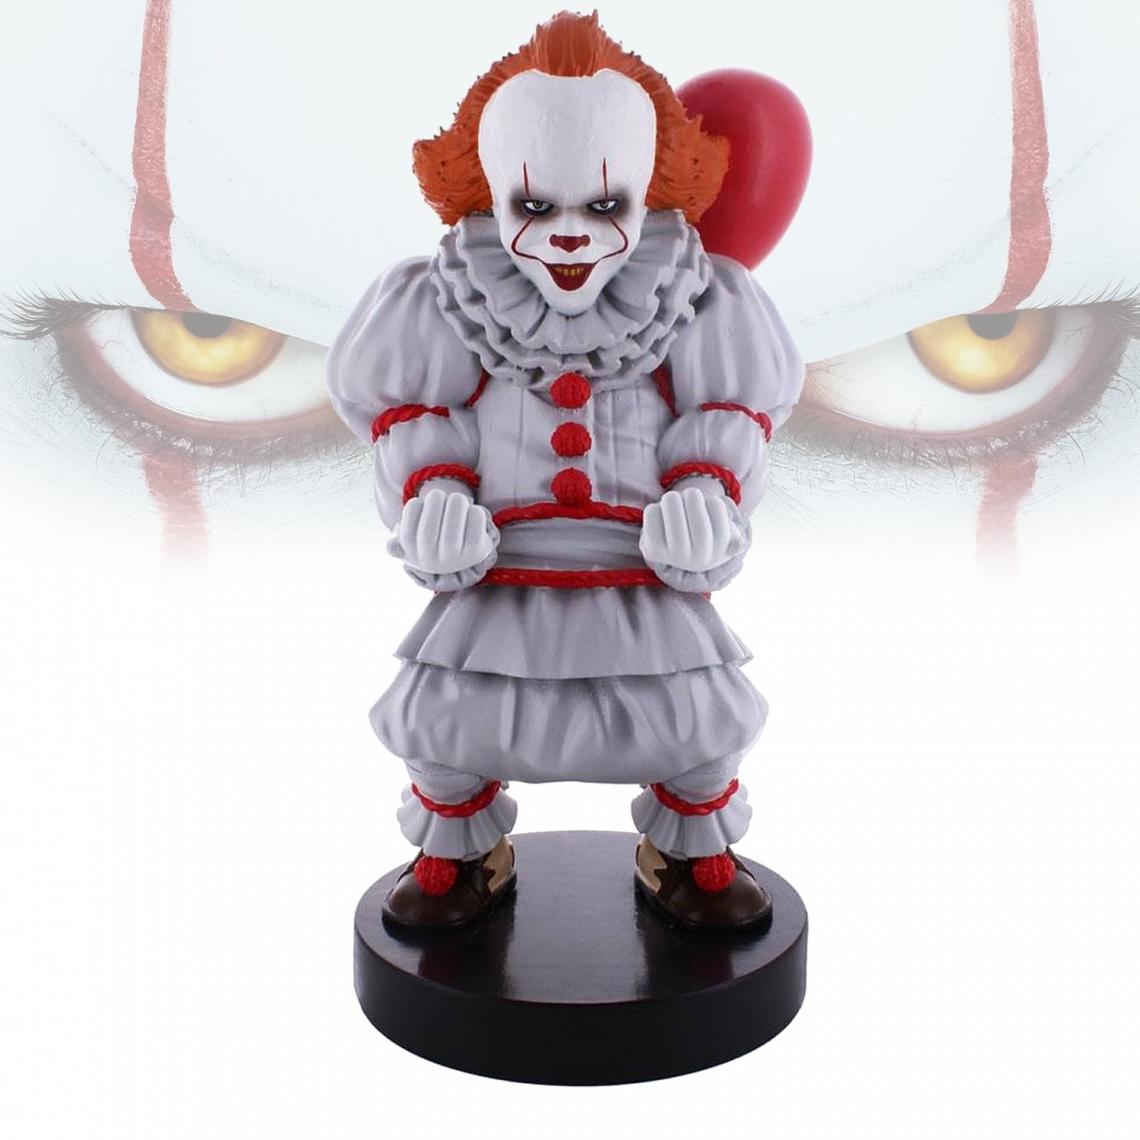 Exquisit - Figurine Pennywise IT "ça" le clown cable guy, Support compatible manette Xbox / PS4 / PS5 / Smartphone et autres - Statues